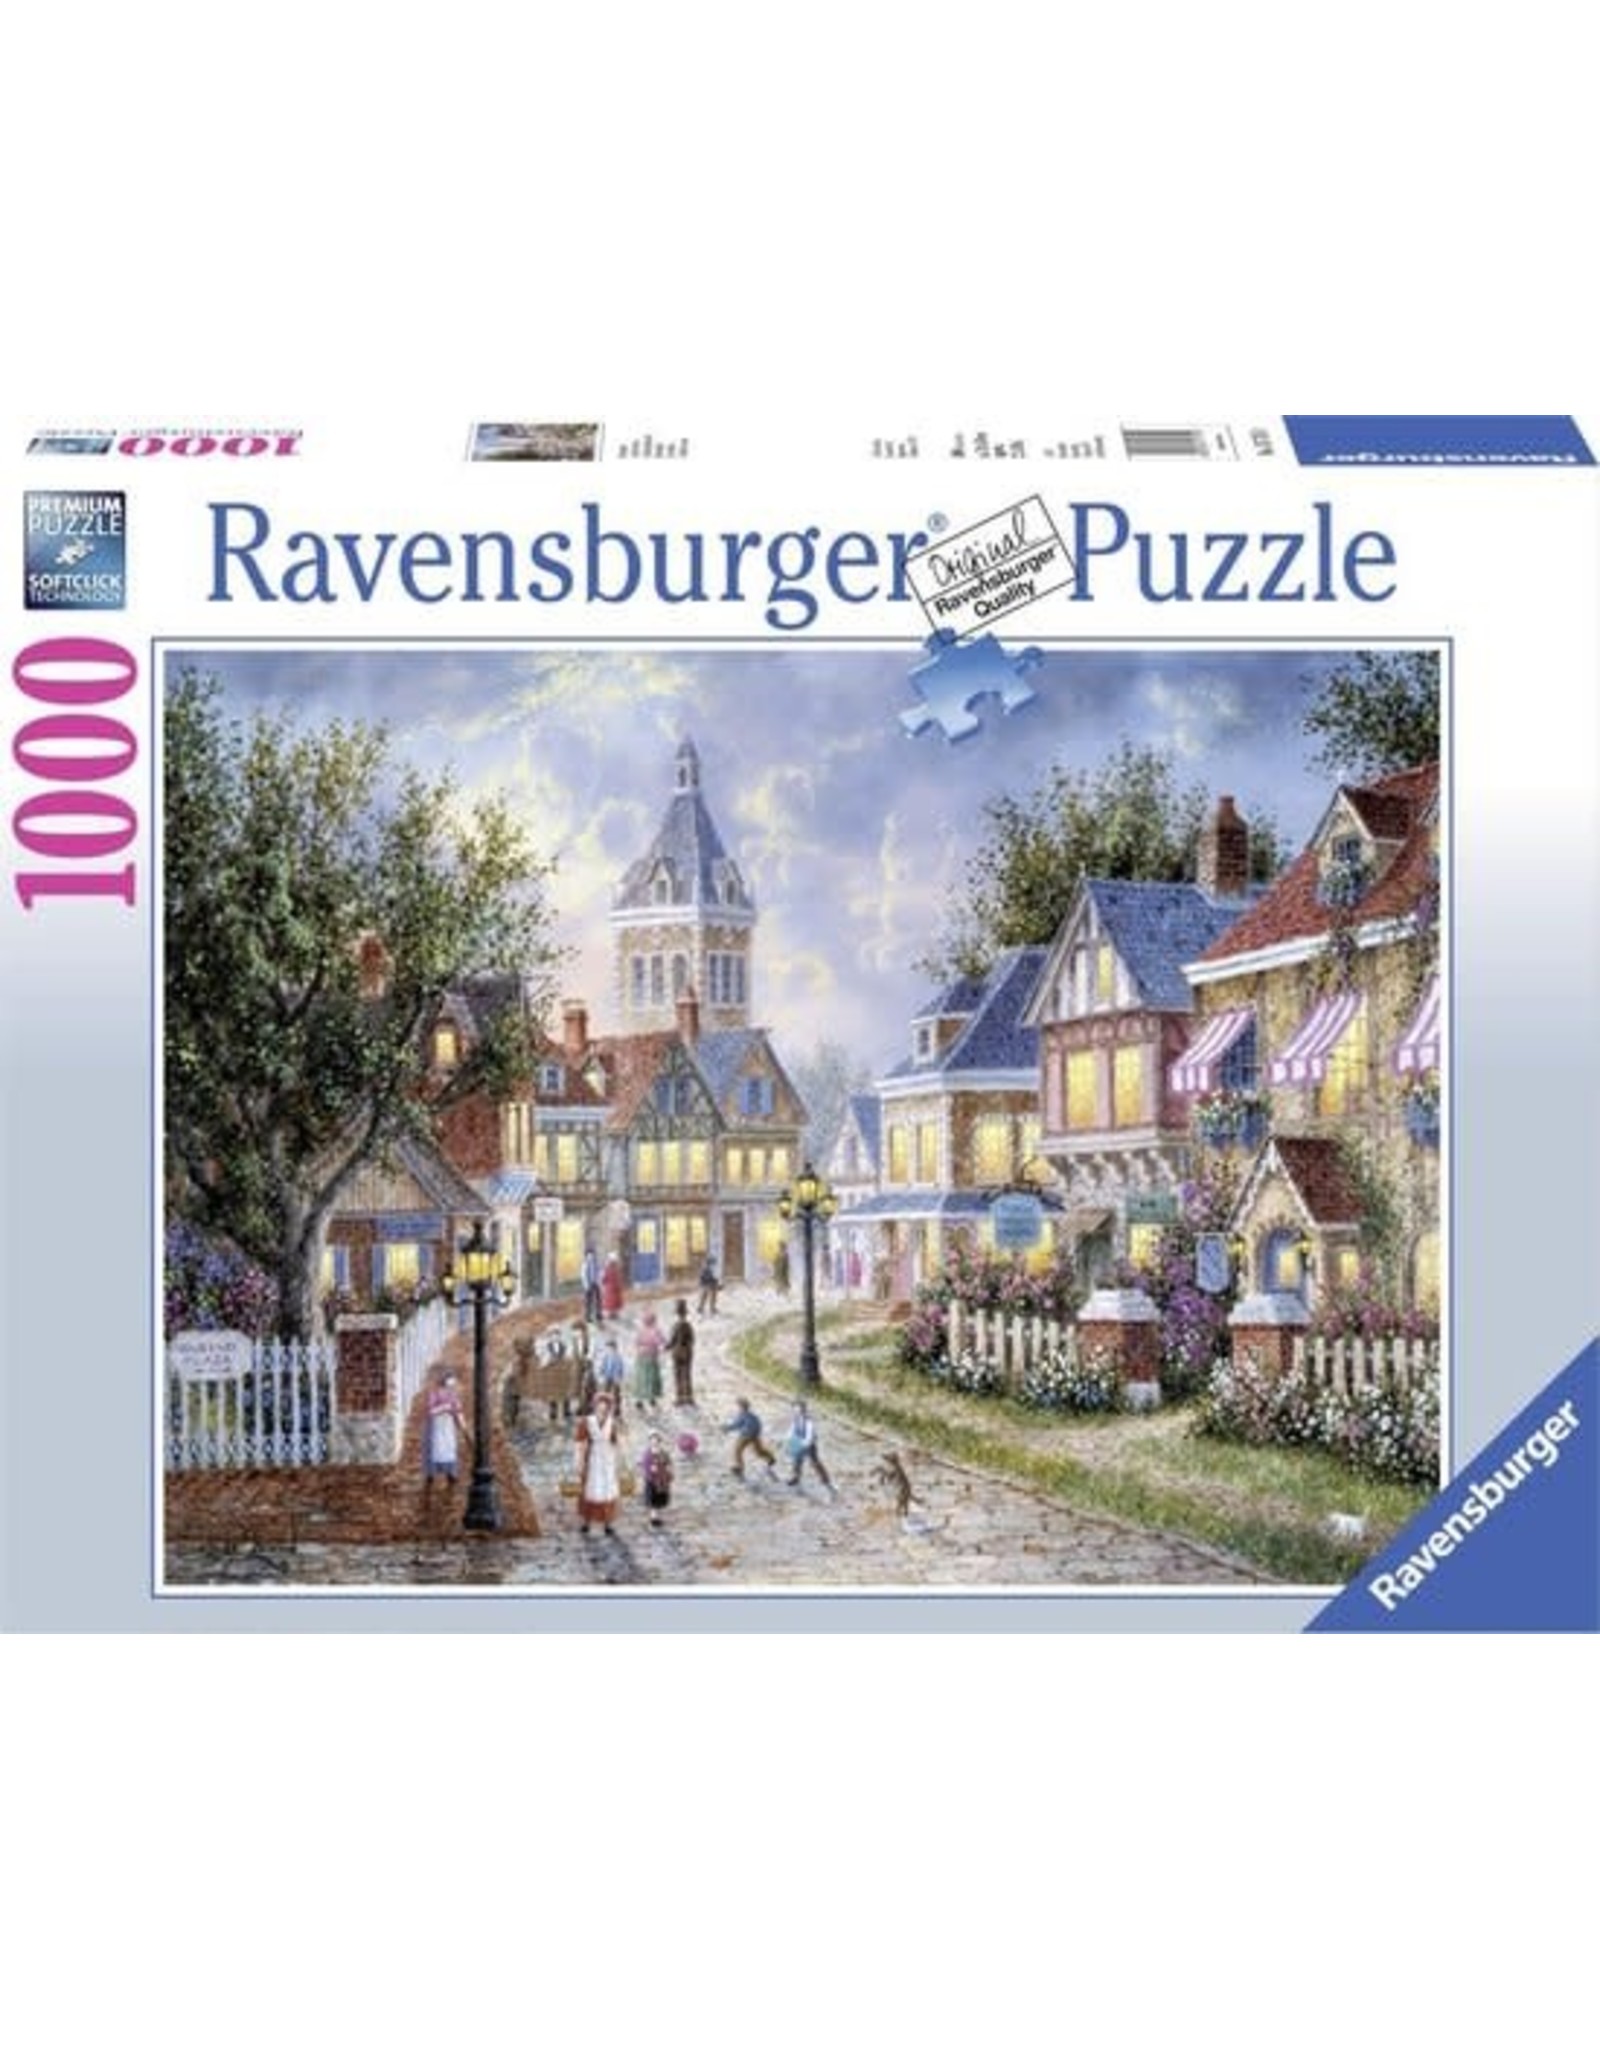 Ravensburger Ravensburger puzzel 157150 Berenwolken, Dennis Lewan 1000 stukjes